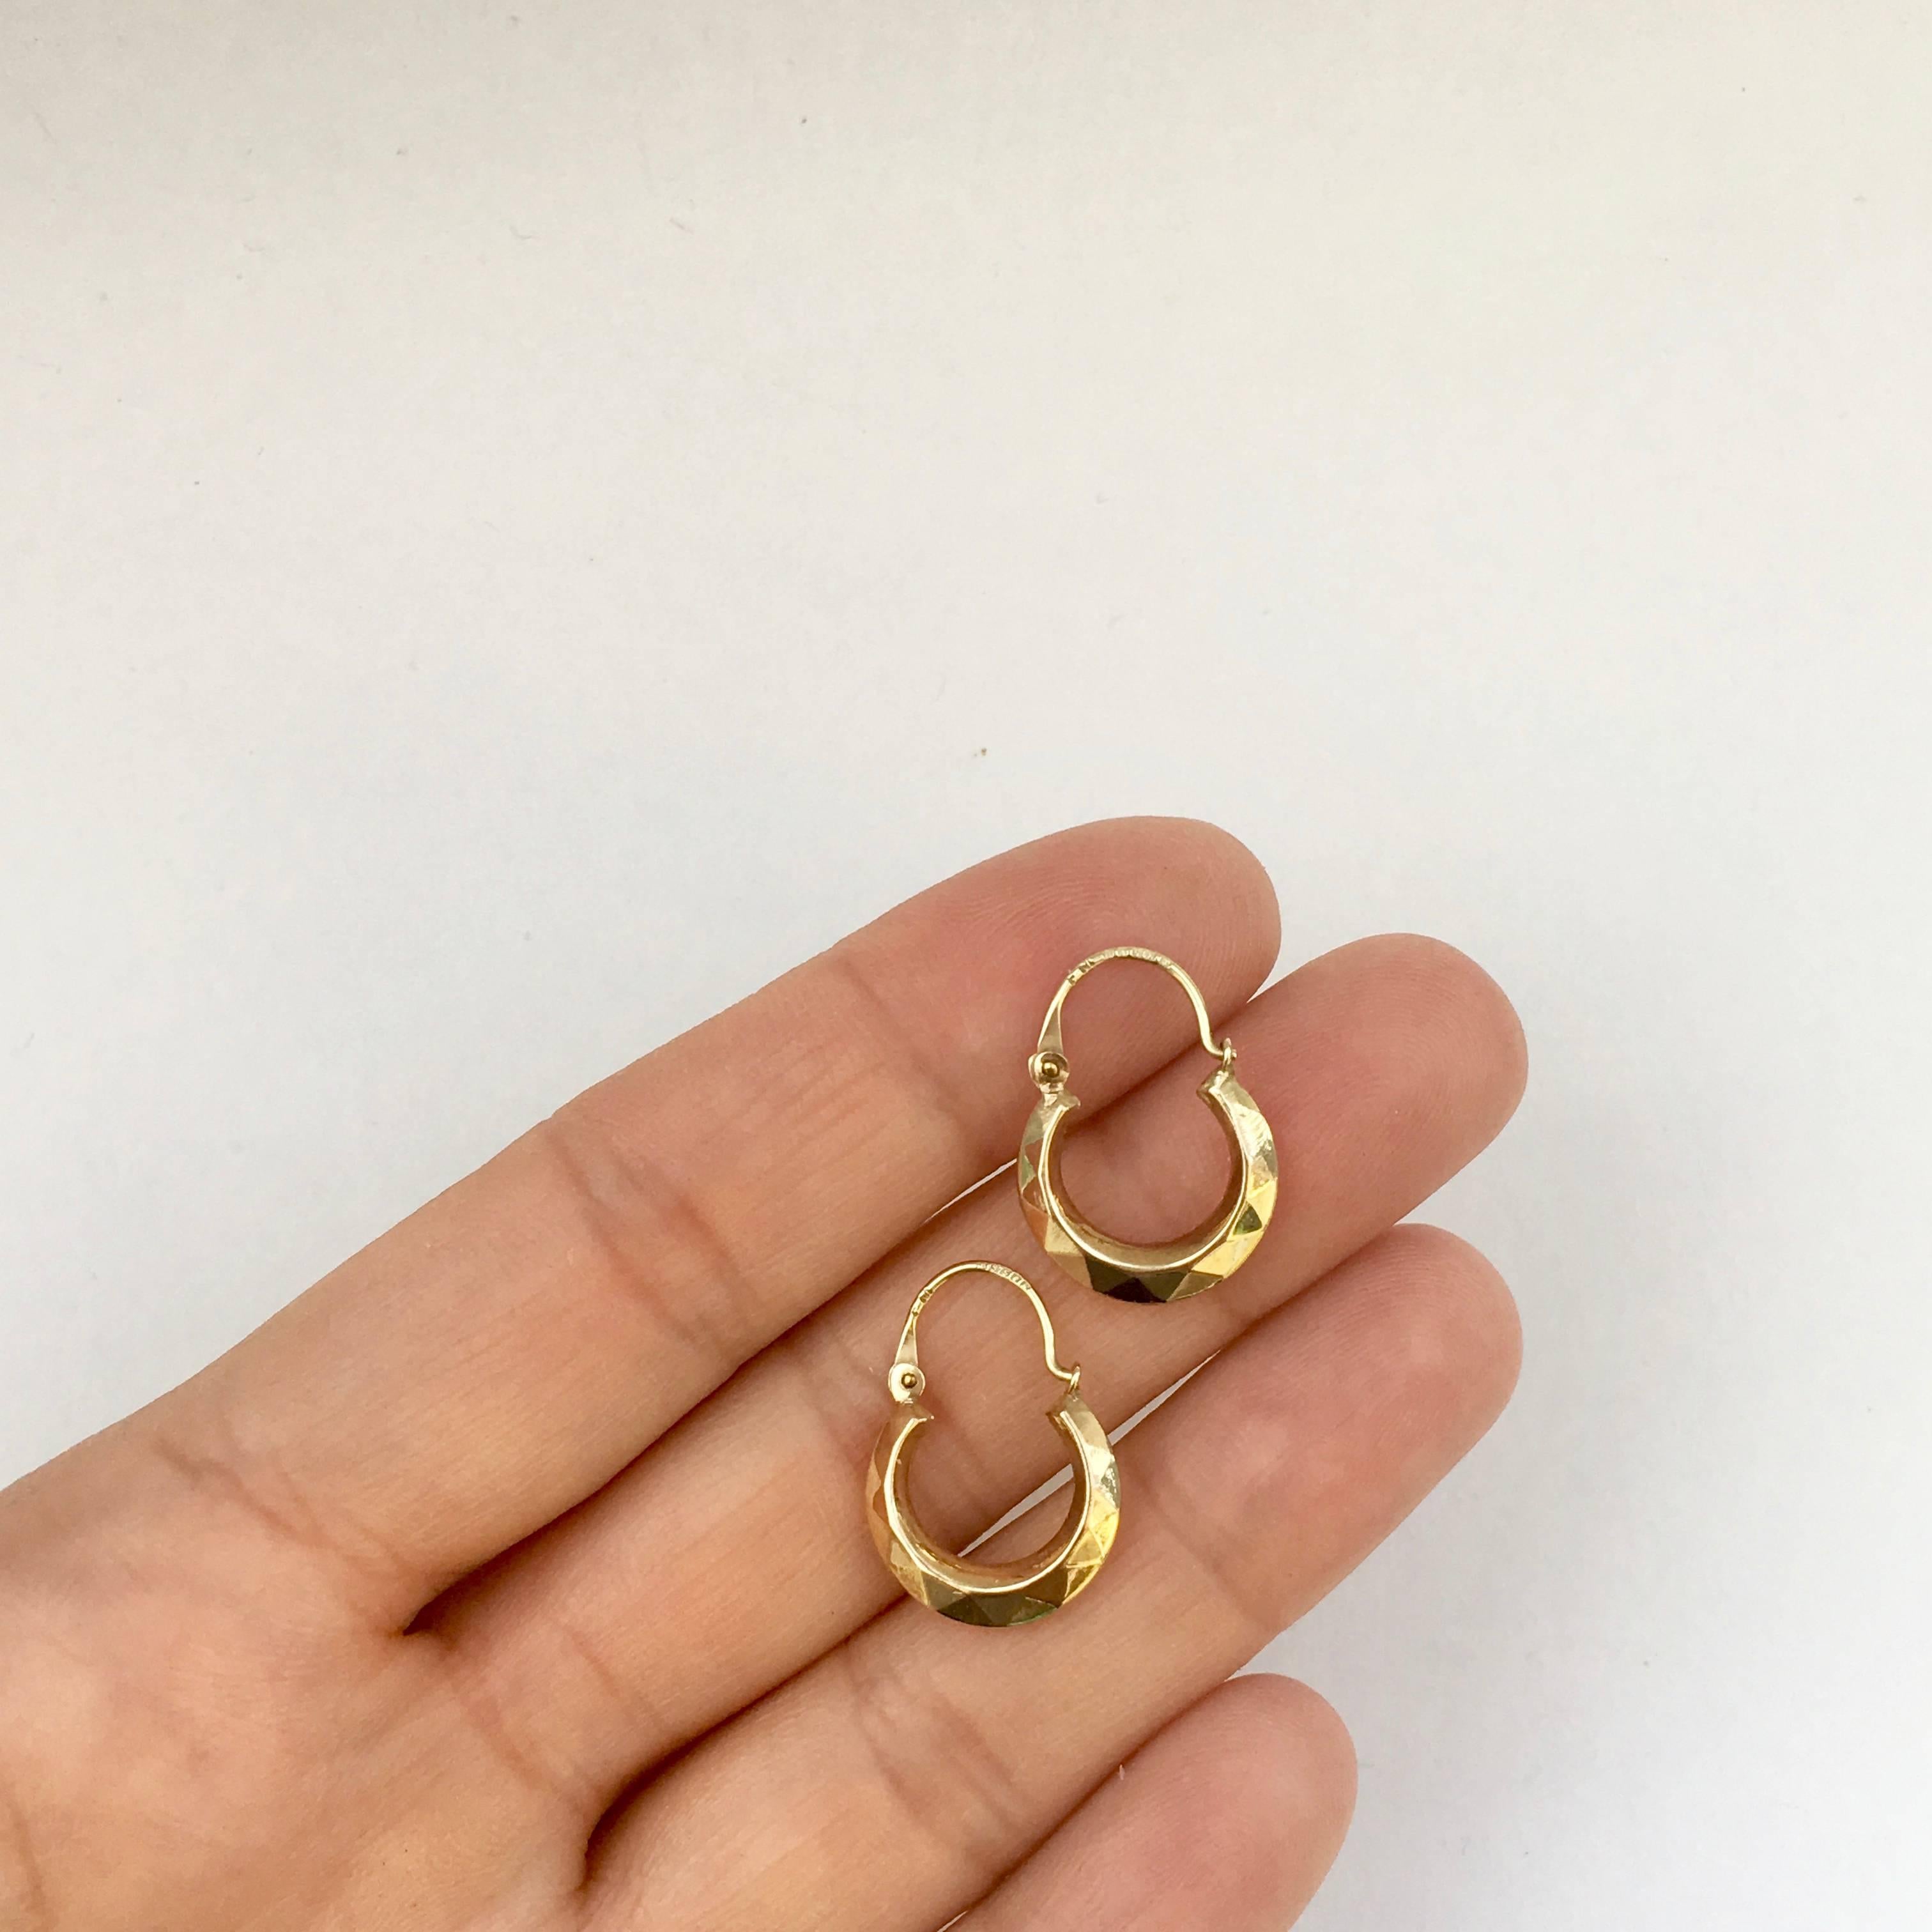 Small Gold Hoops 1980s Vintage Jewelry Faceted Dainty Hoop Earrings 1